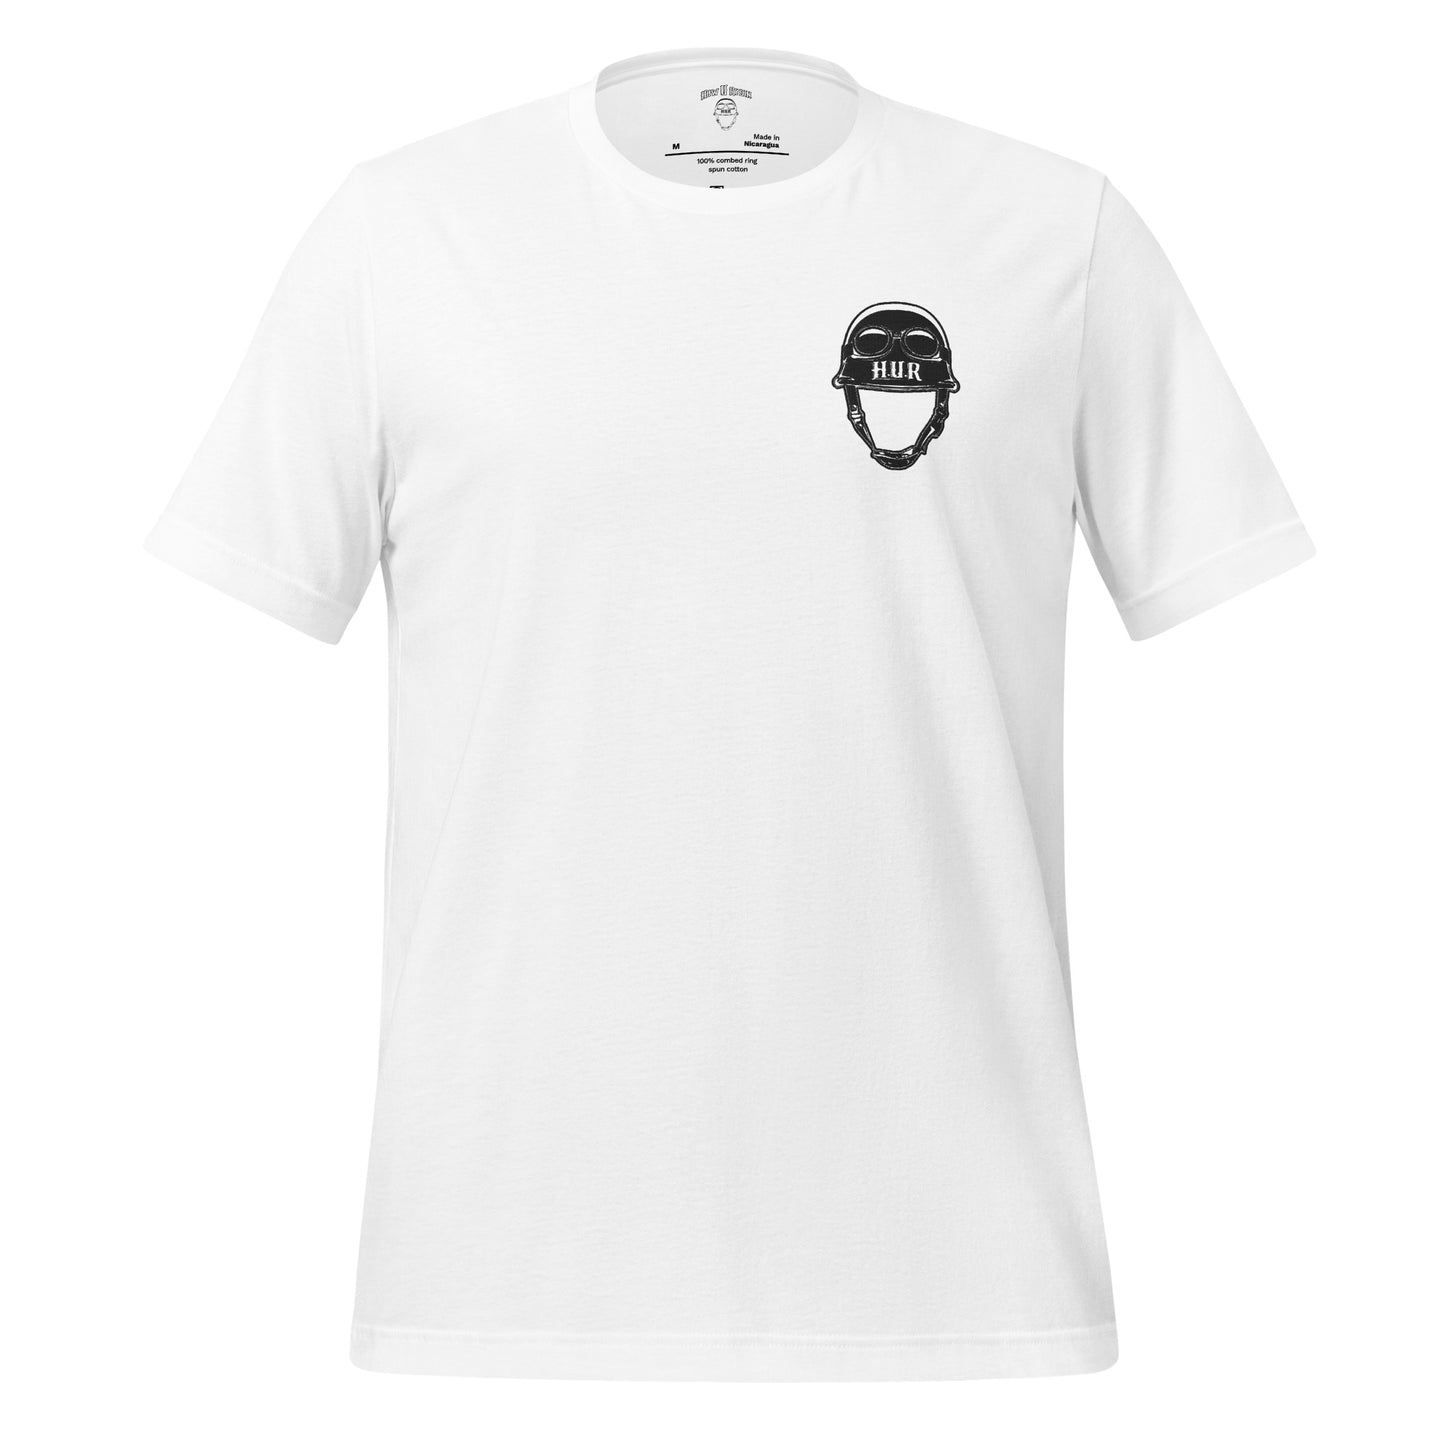 White Unisex t-shirt